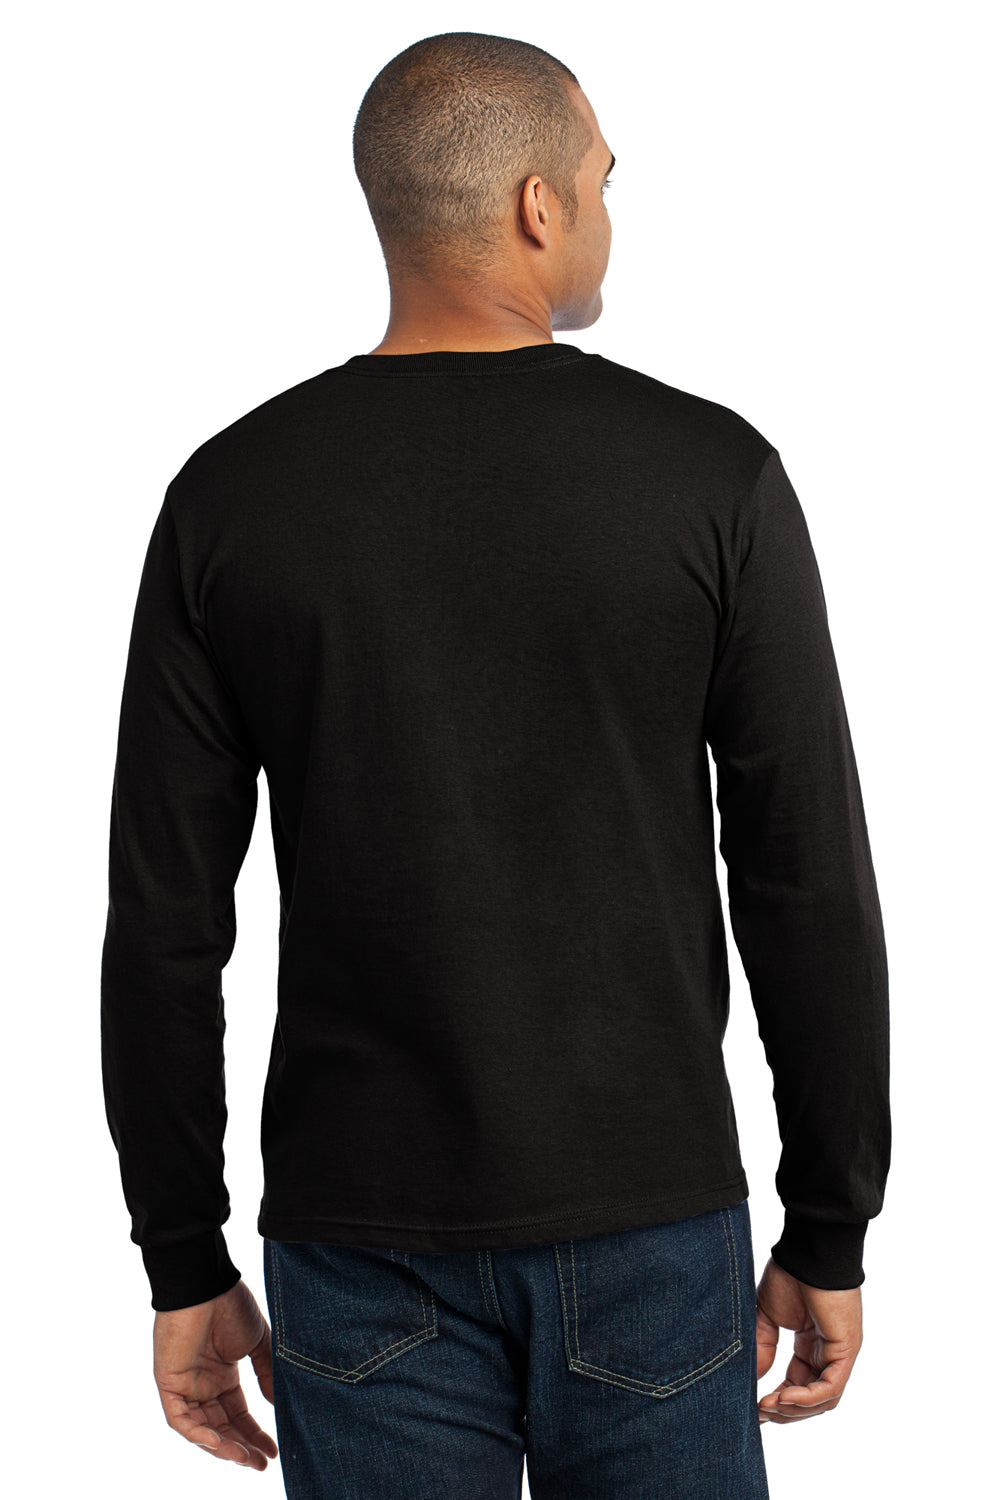 Port & Company USA100LS Mens USA Made Long Sleeve Crewneck T-Shirt Black Back